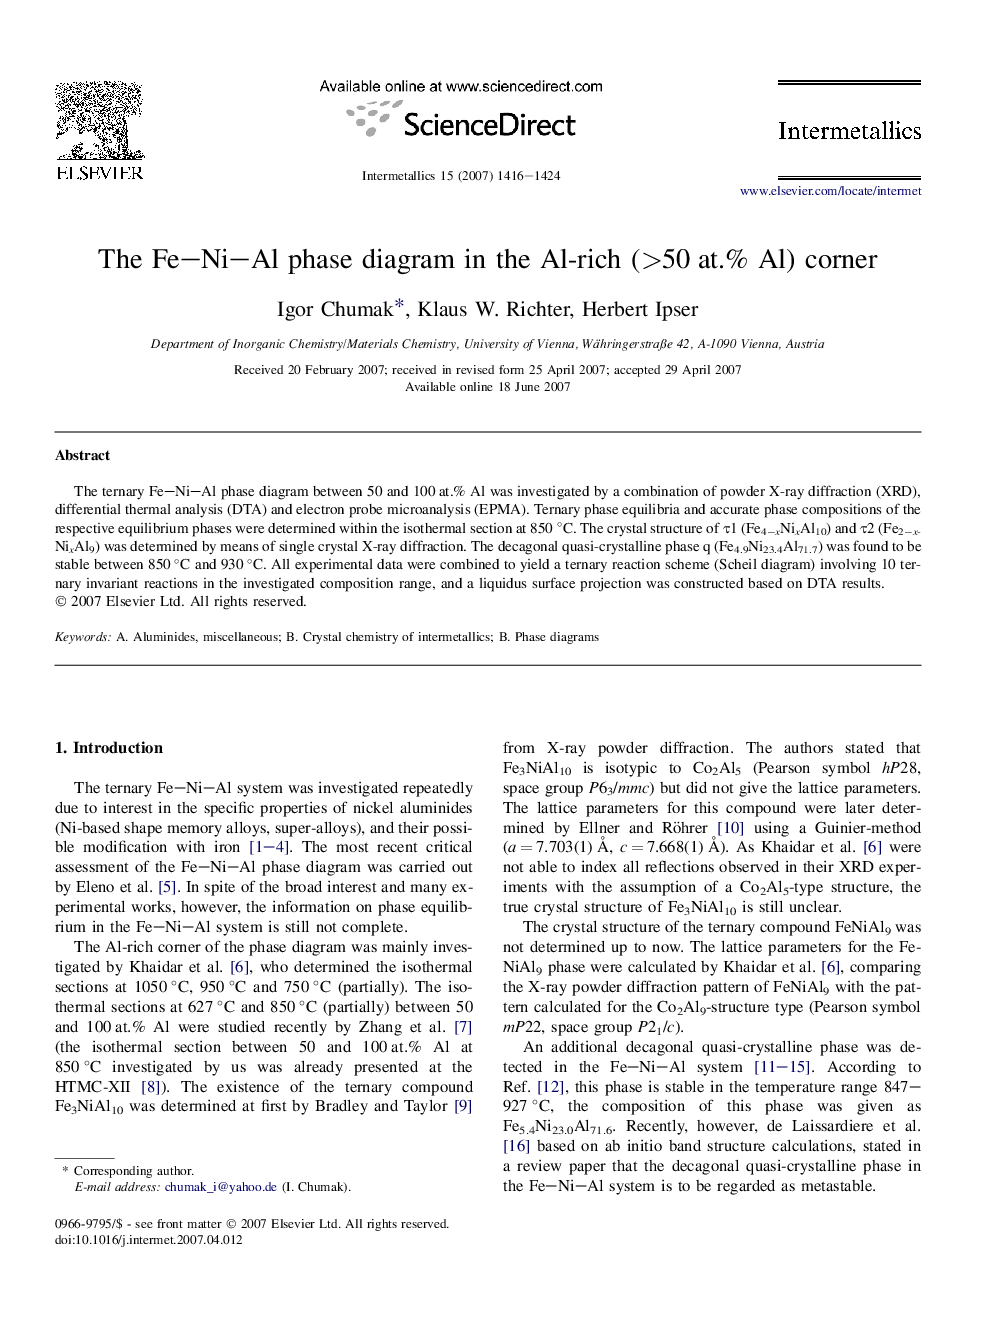 The Fe–Ni–Al phase diagram in the Al-rich (>50 at.% Al) corner